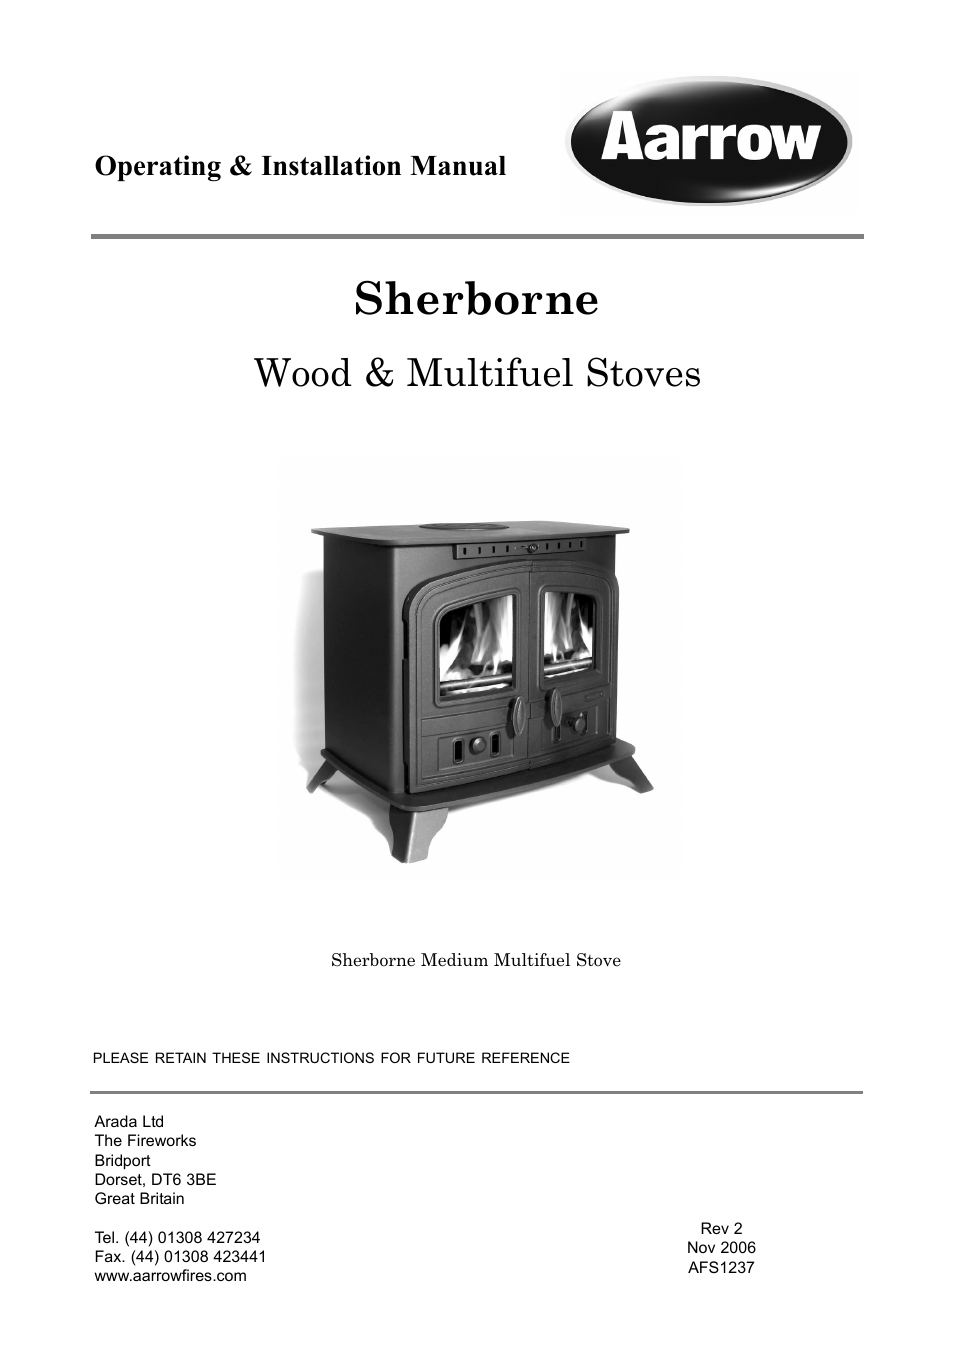 Sherborne Wood & Multifuel Stoves